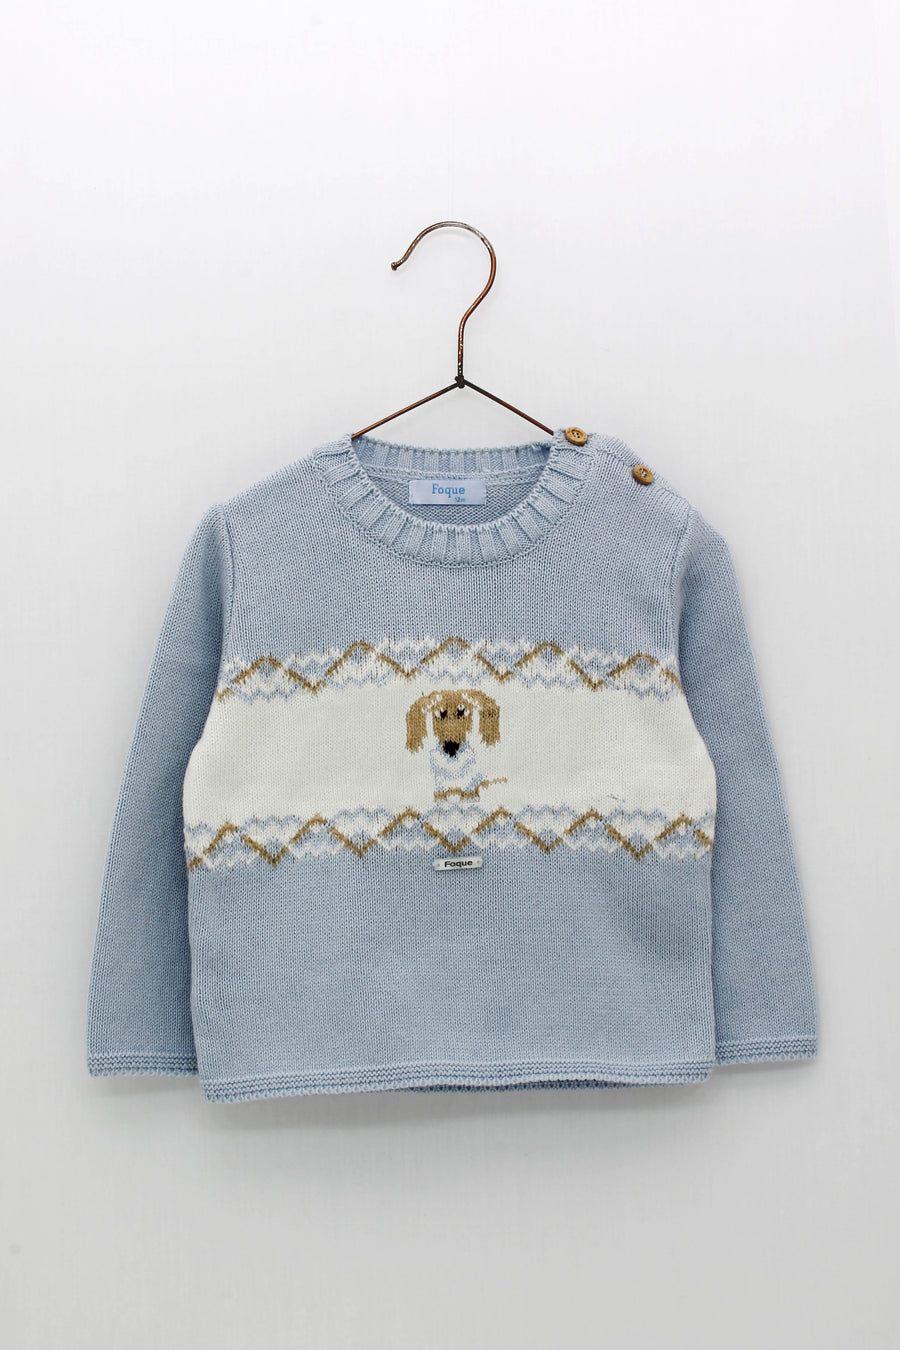 PAW22 Foque Baby Blue Dog Motif Sweater